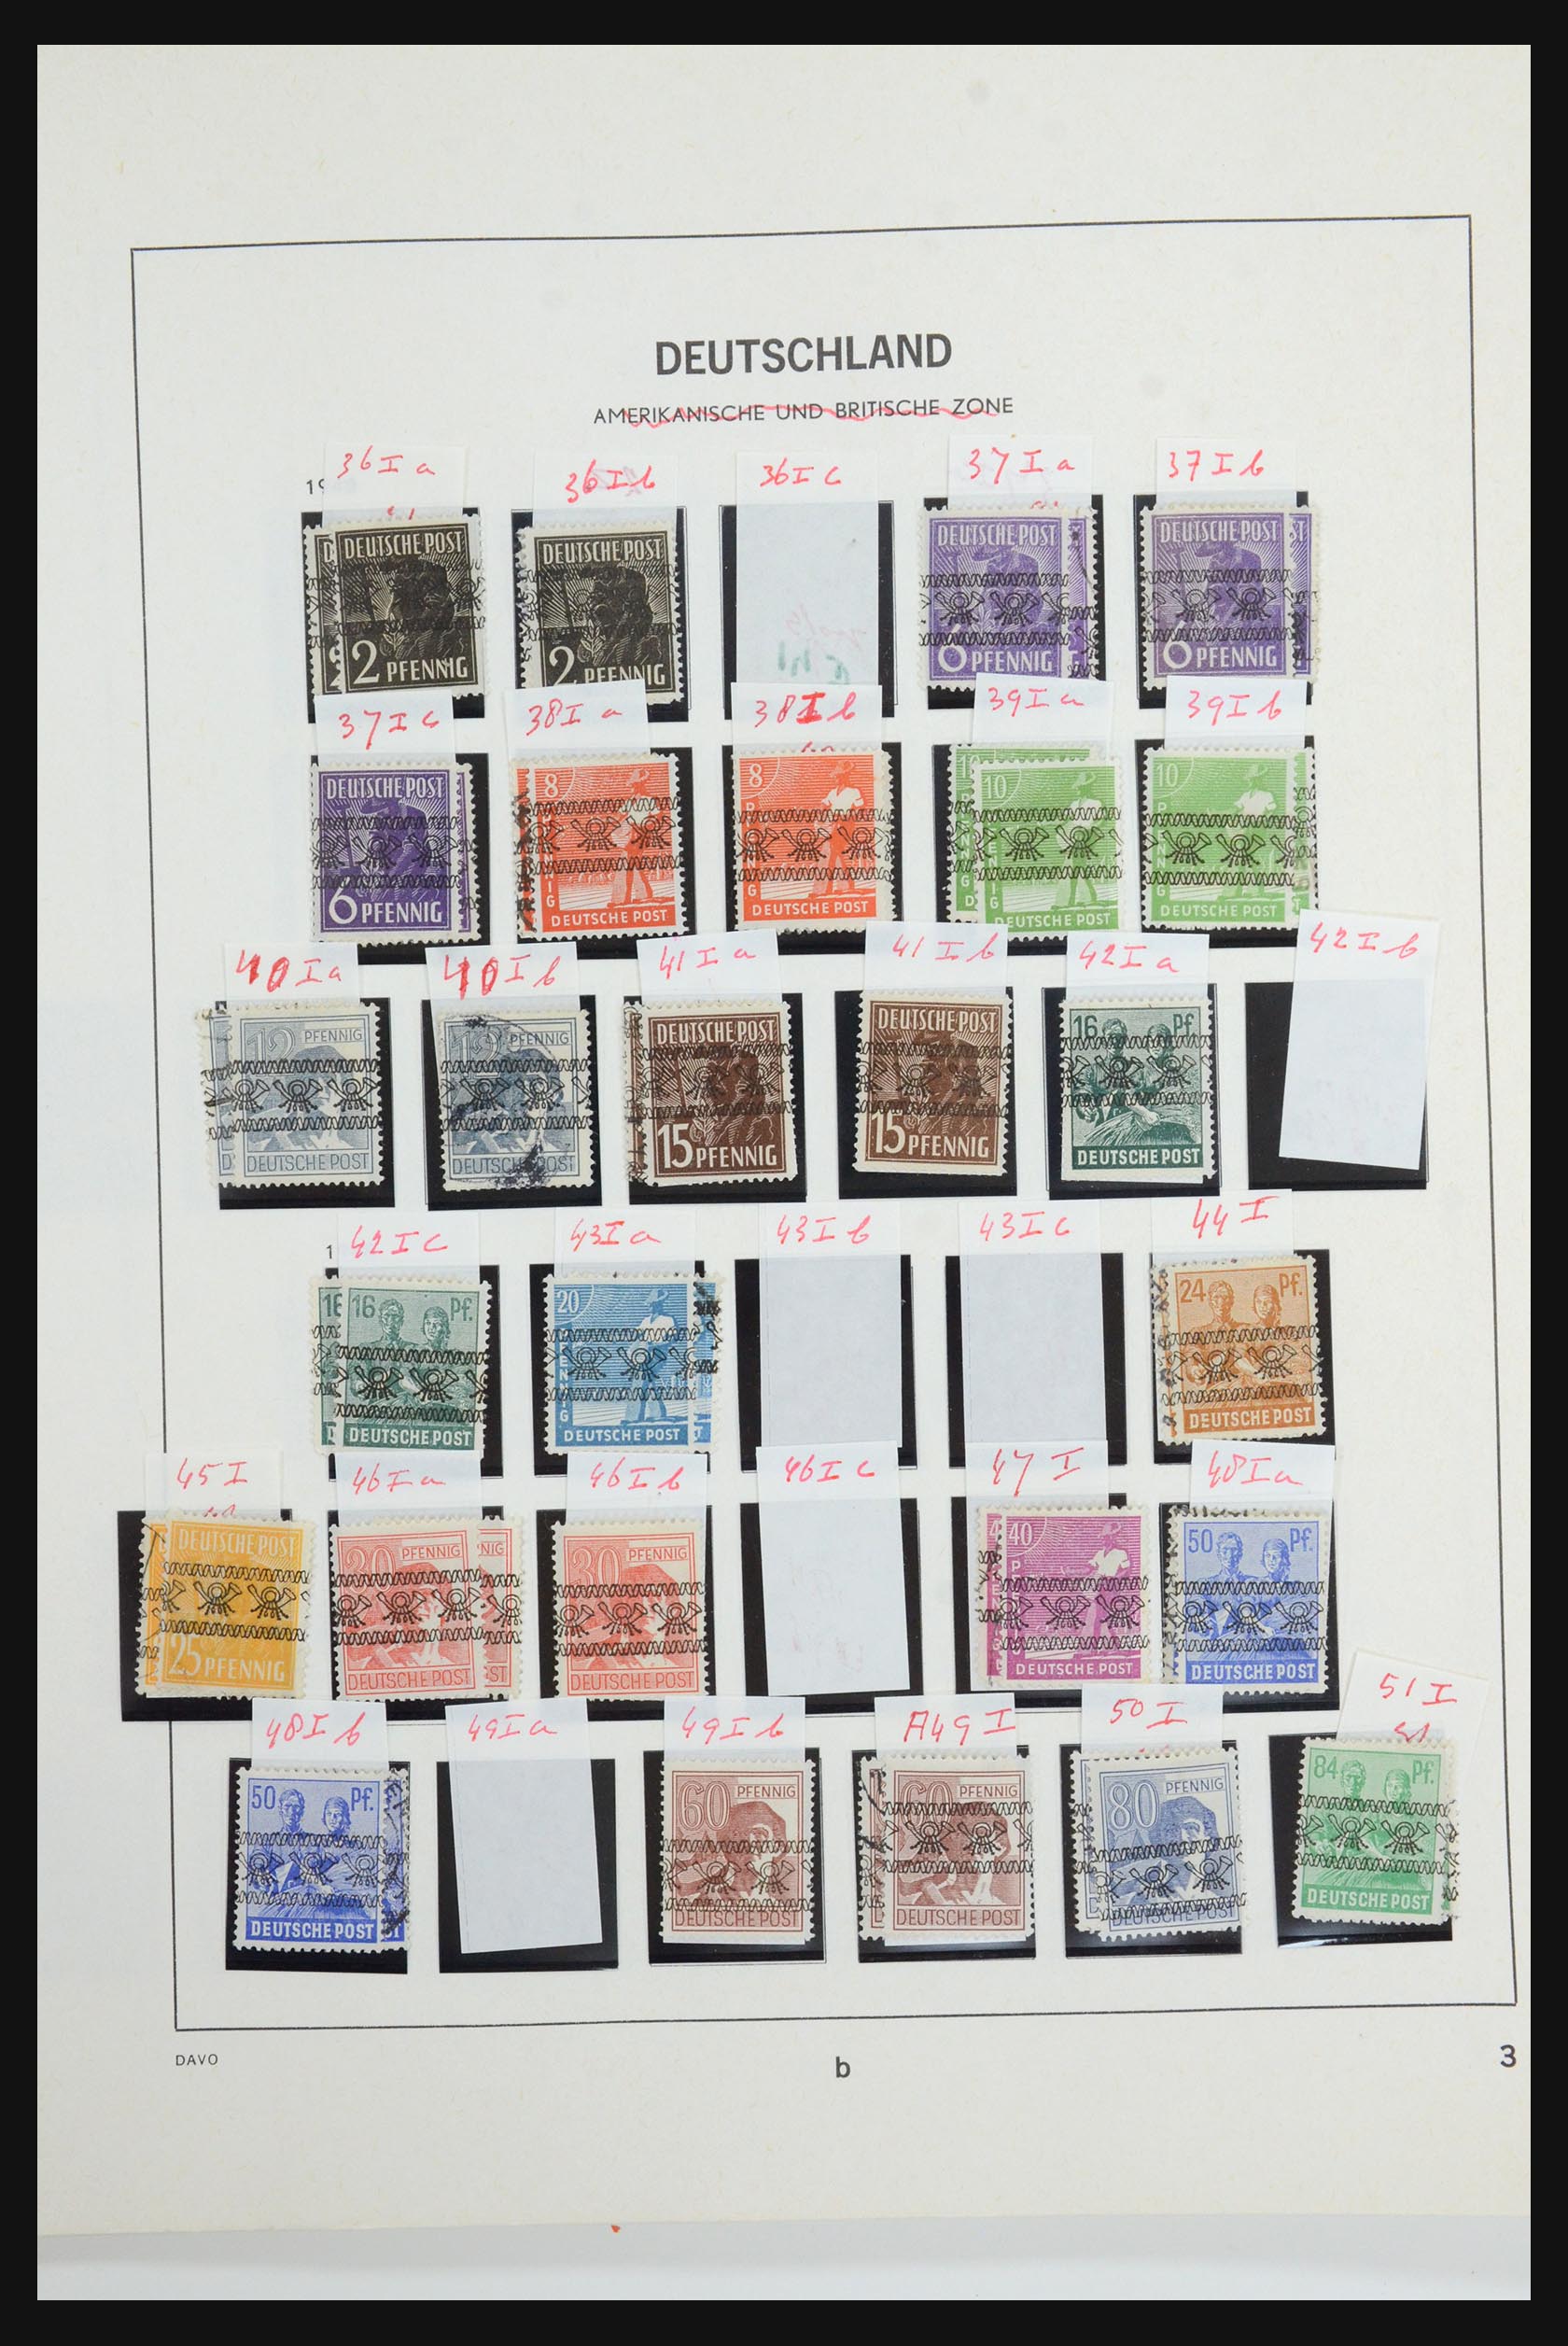 31635 033 - 31635 Bundespost 1949-2000.